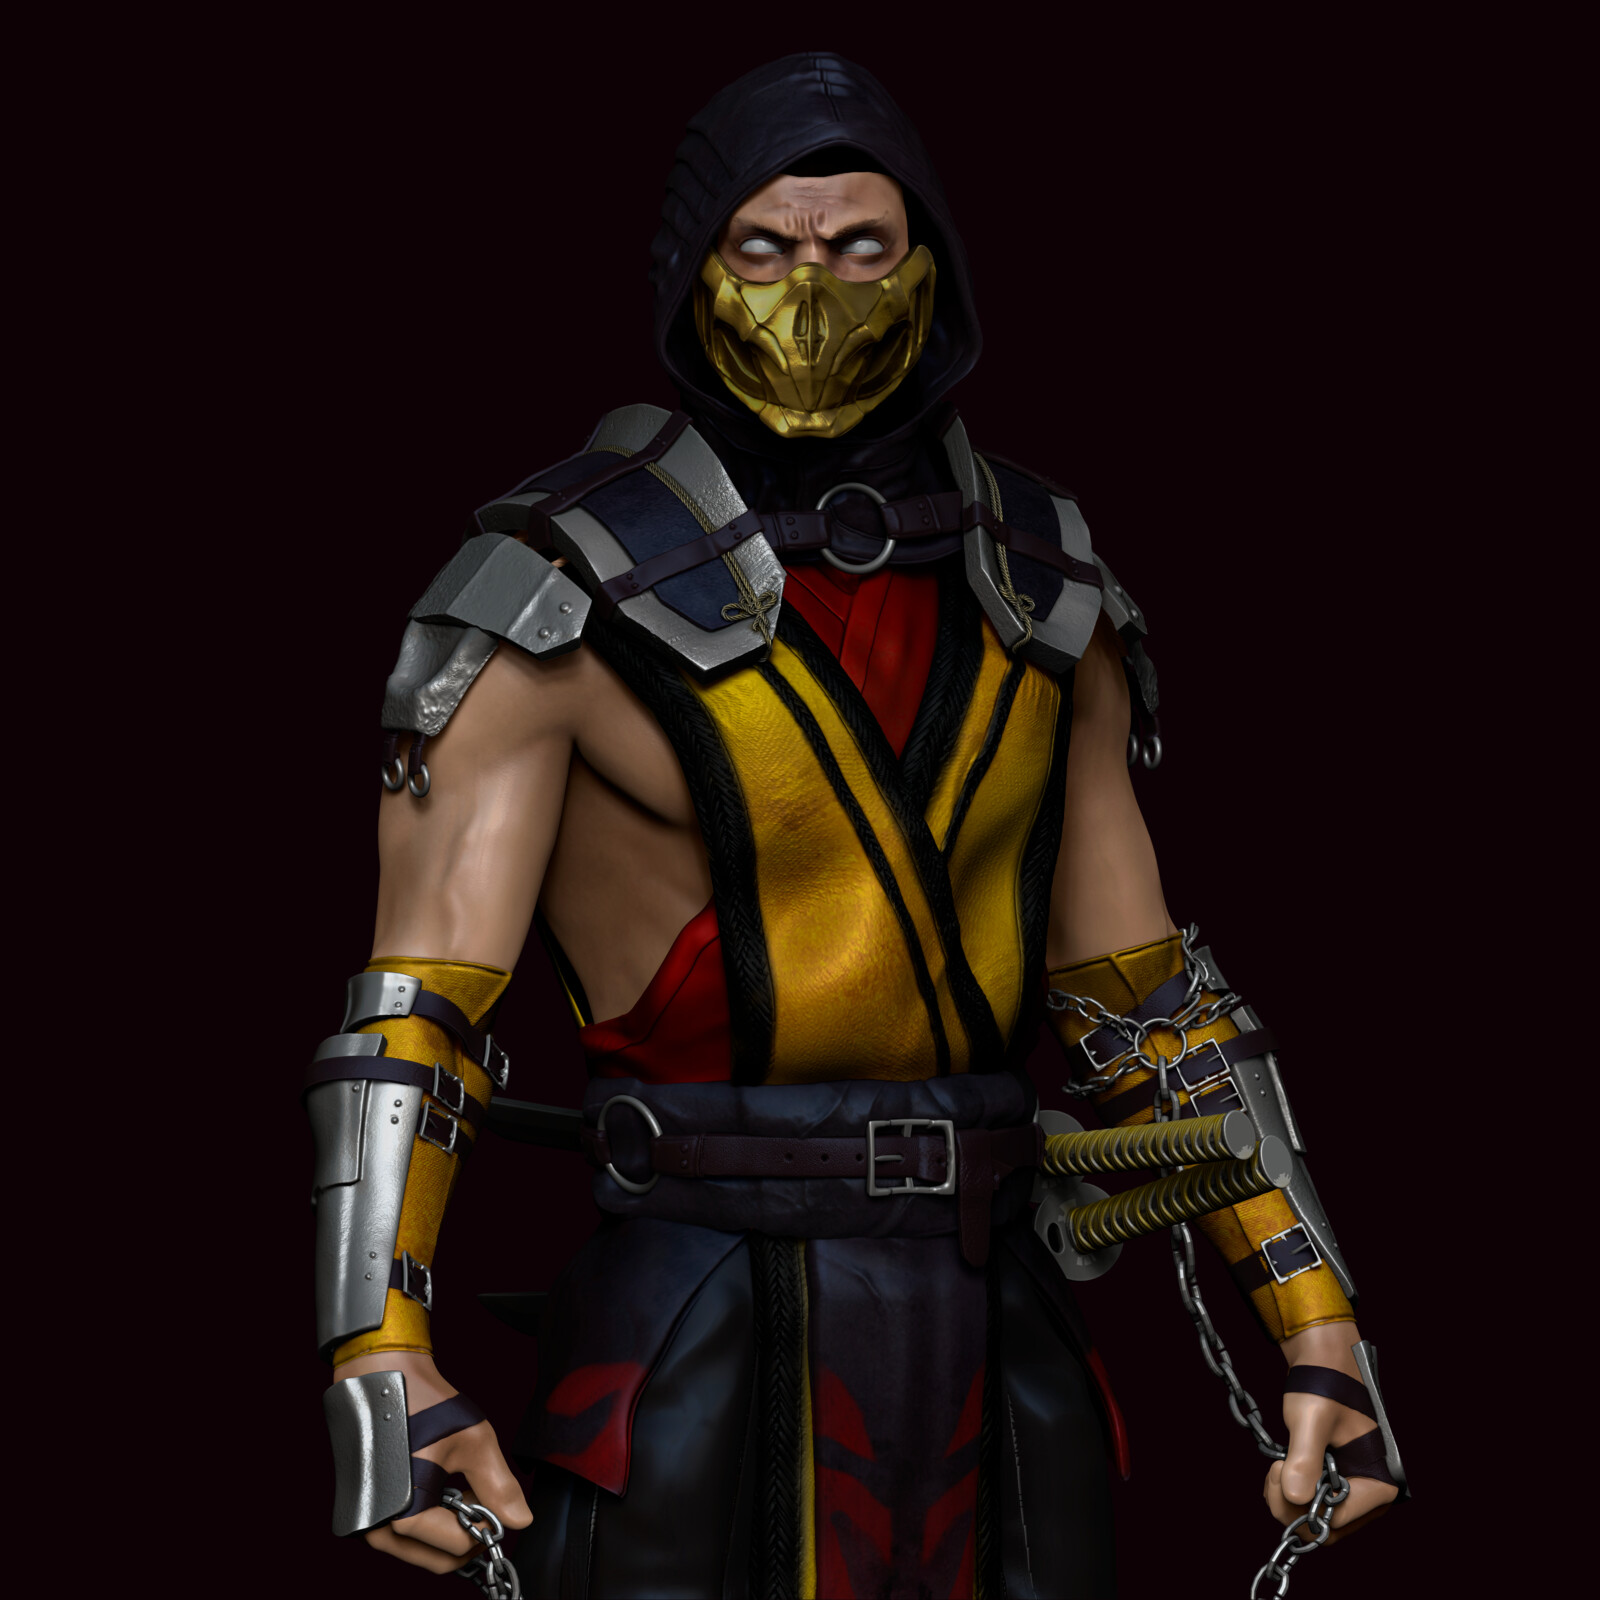 Scorpion - Mortal Kombat ( MK 11 )
(PS)